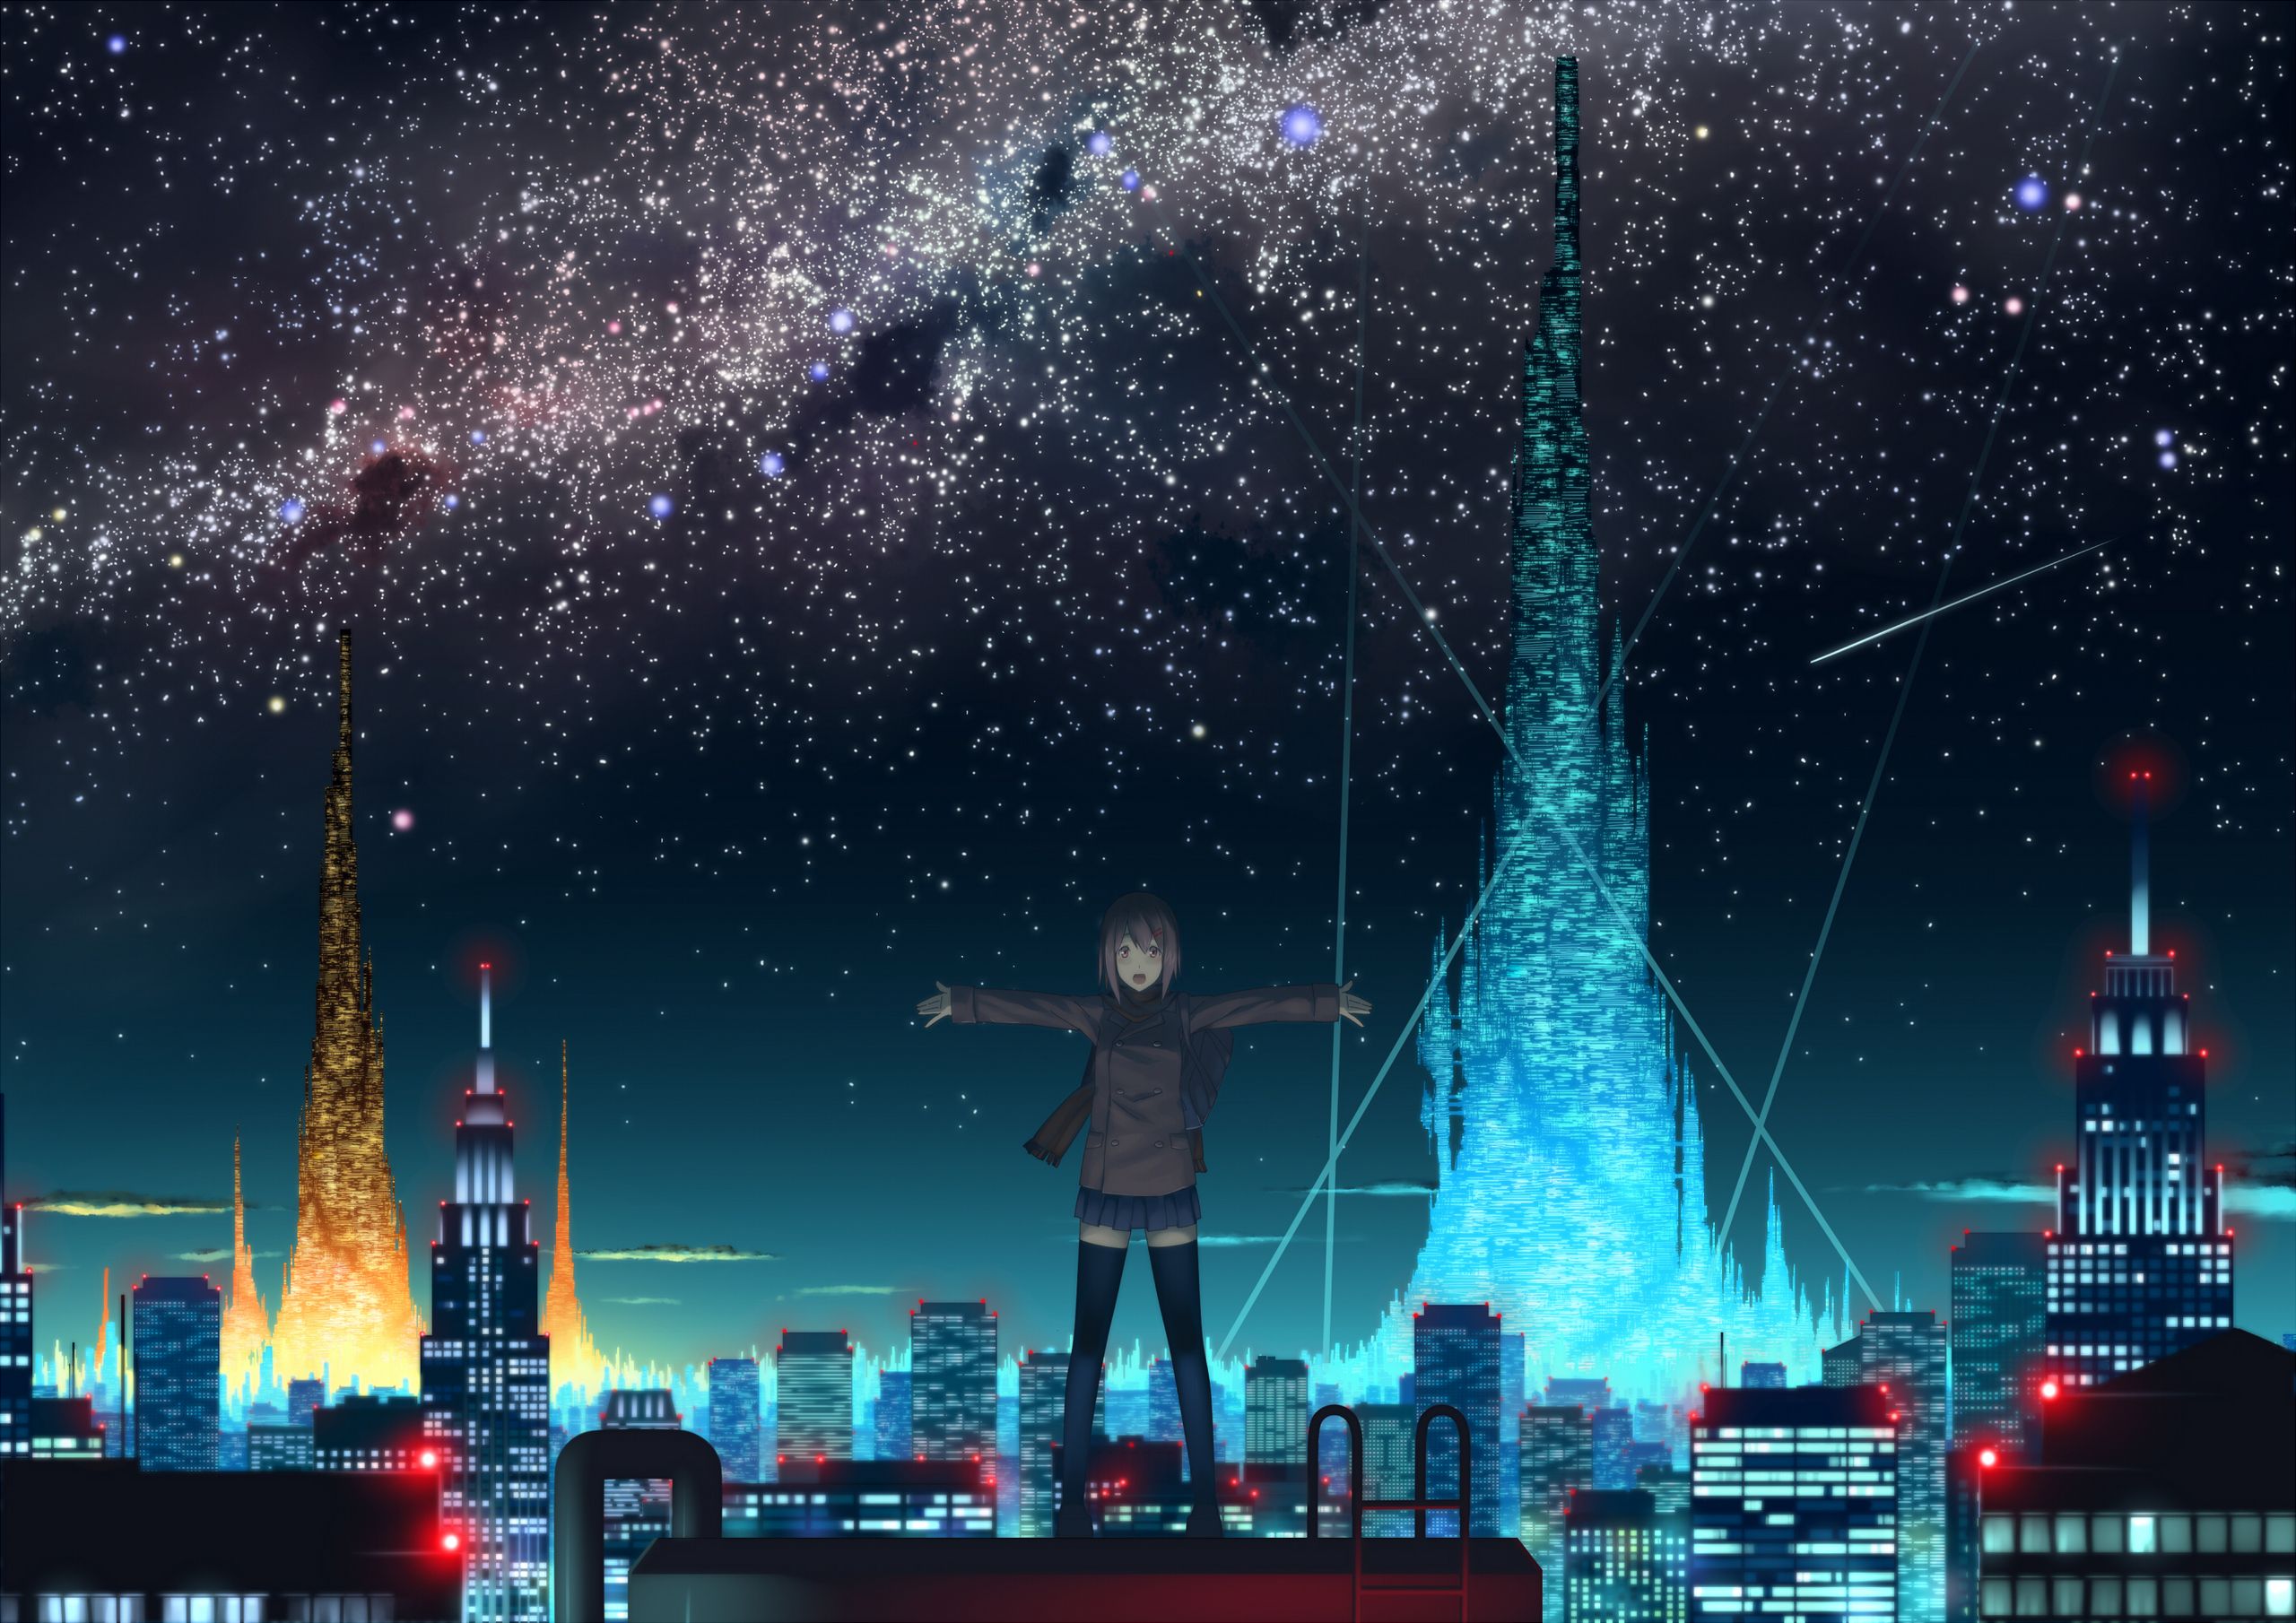 Anime Photo: Anime Scenery. Anime scenery wallpaper, Anime city, Anime scenery